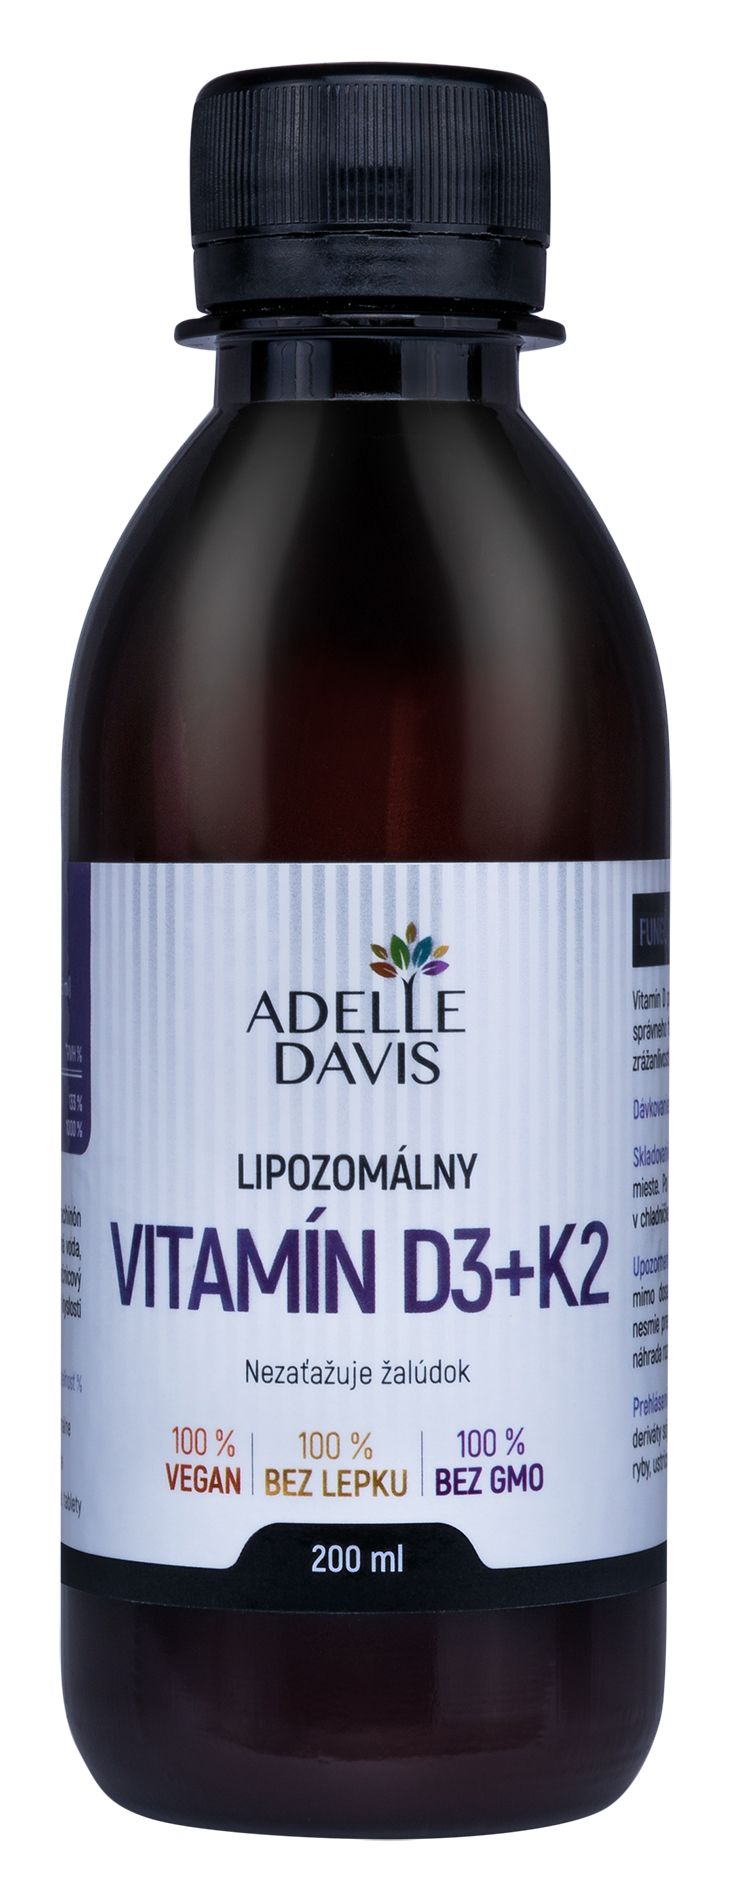 E-shop Adelle Davis tekutý lipozomálny vitamín D3+K2, 200ml